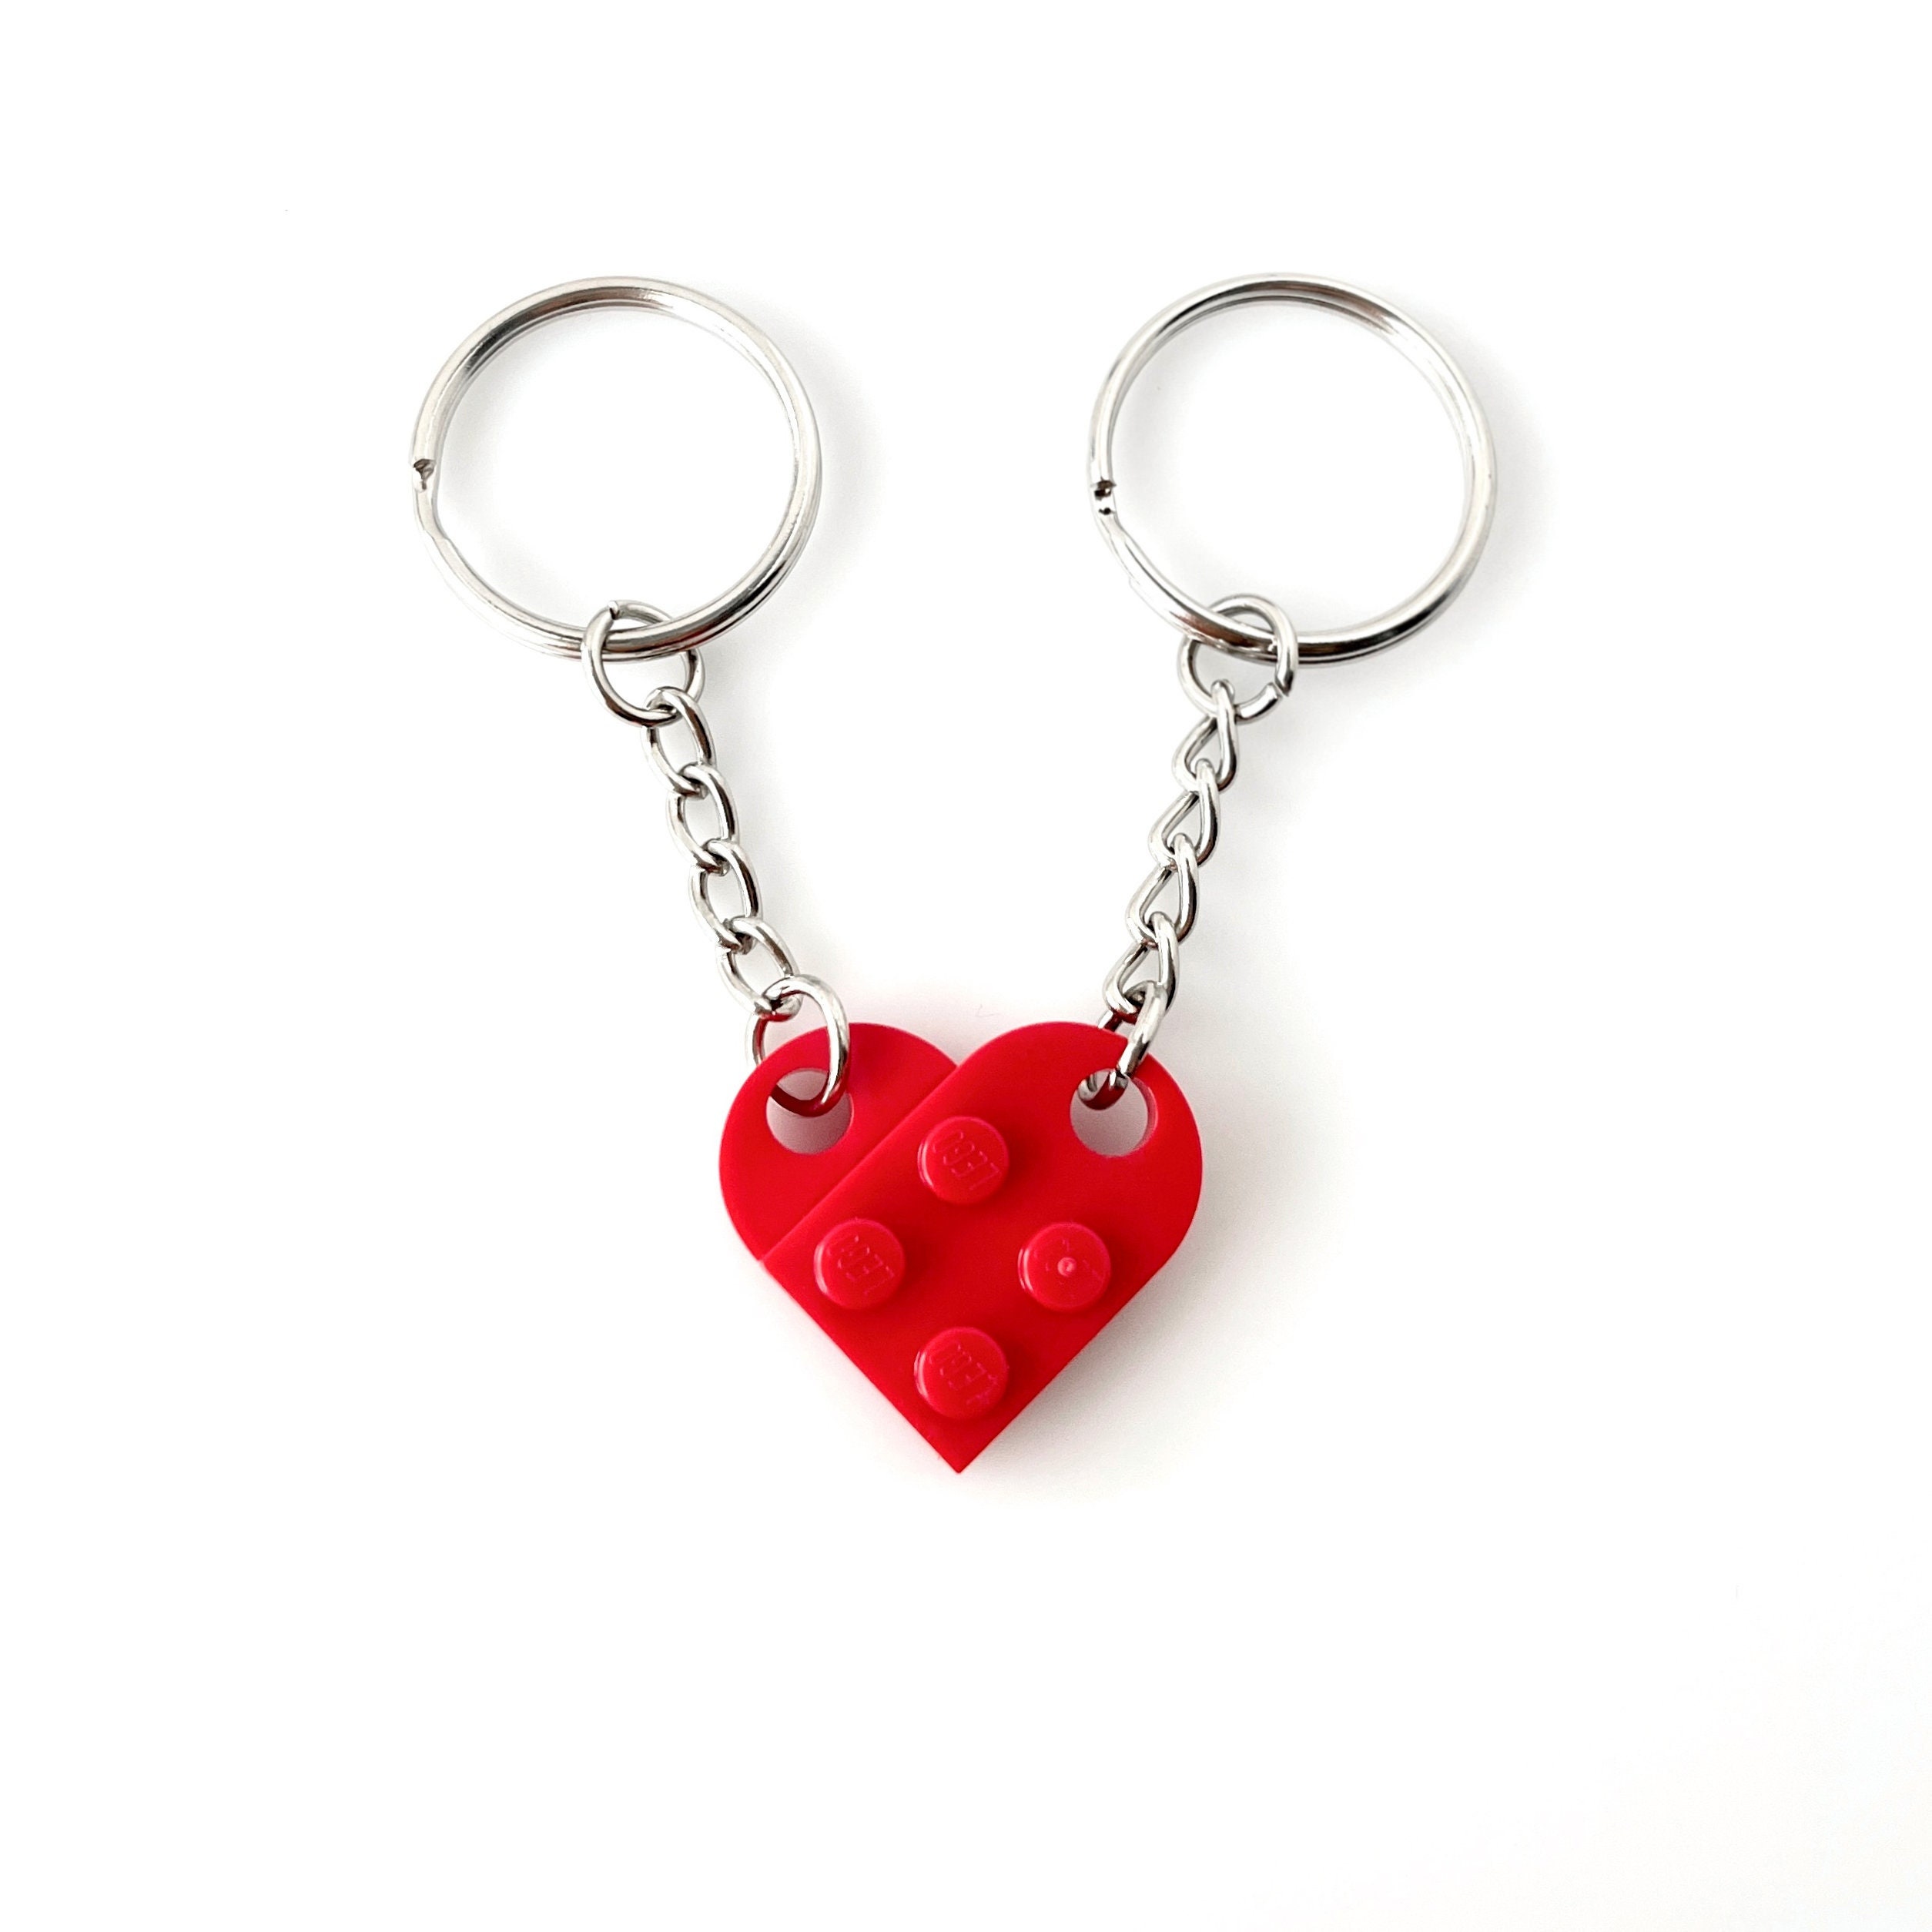 24. LEGO Bricks Heart Keychain